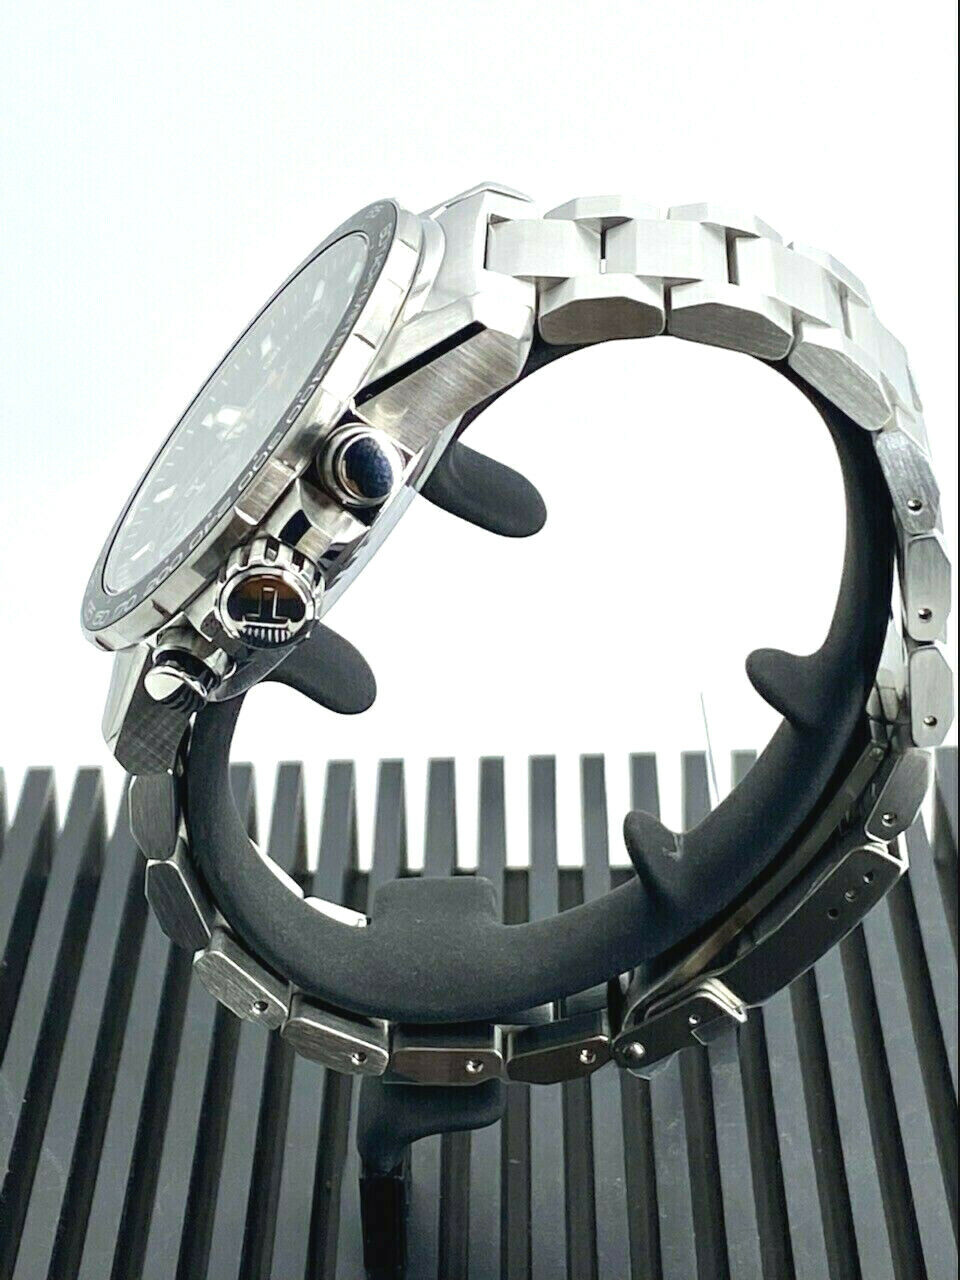 Tissot Supersport Chrono Stainless Steel Men's Watch T1256171105100